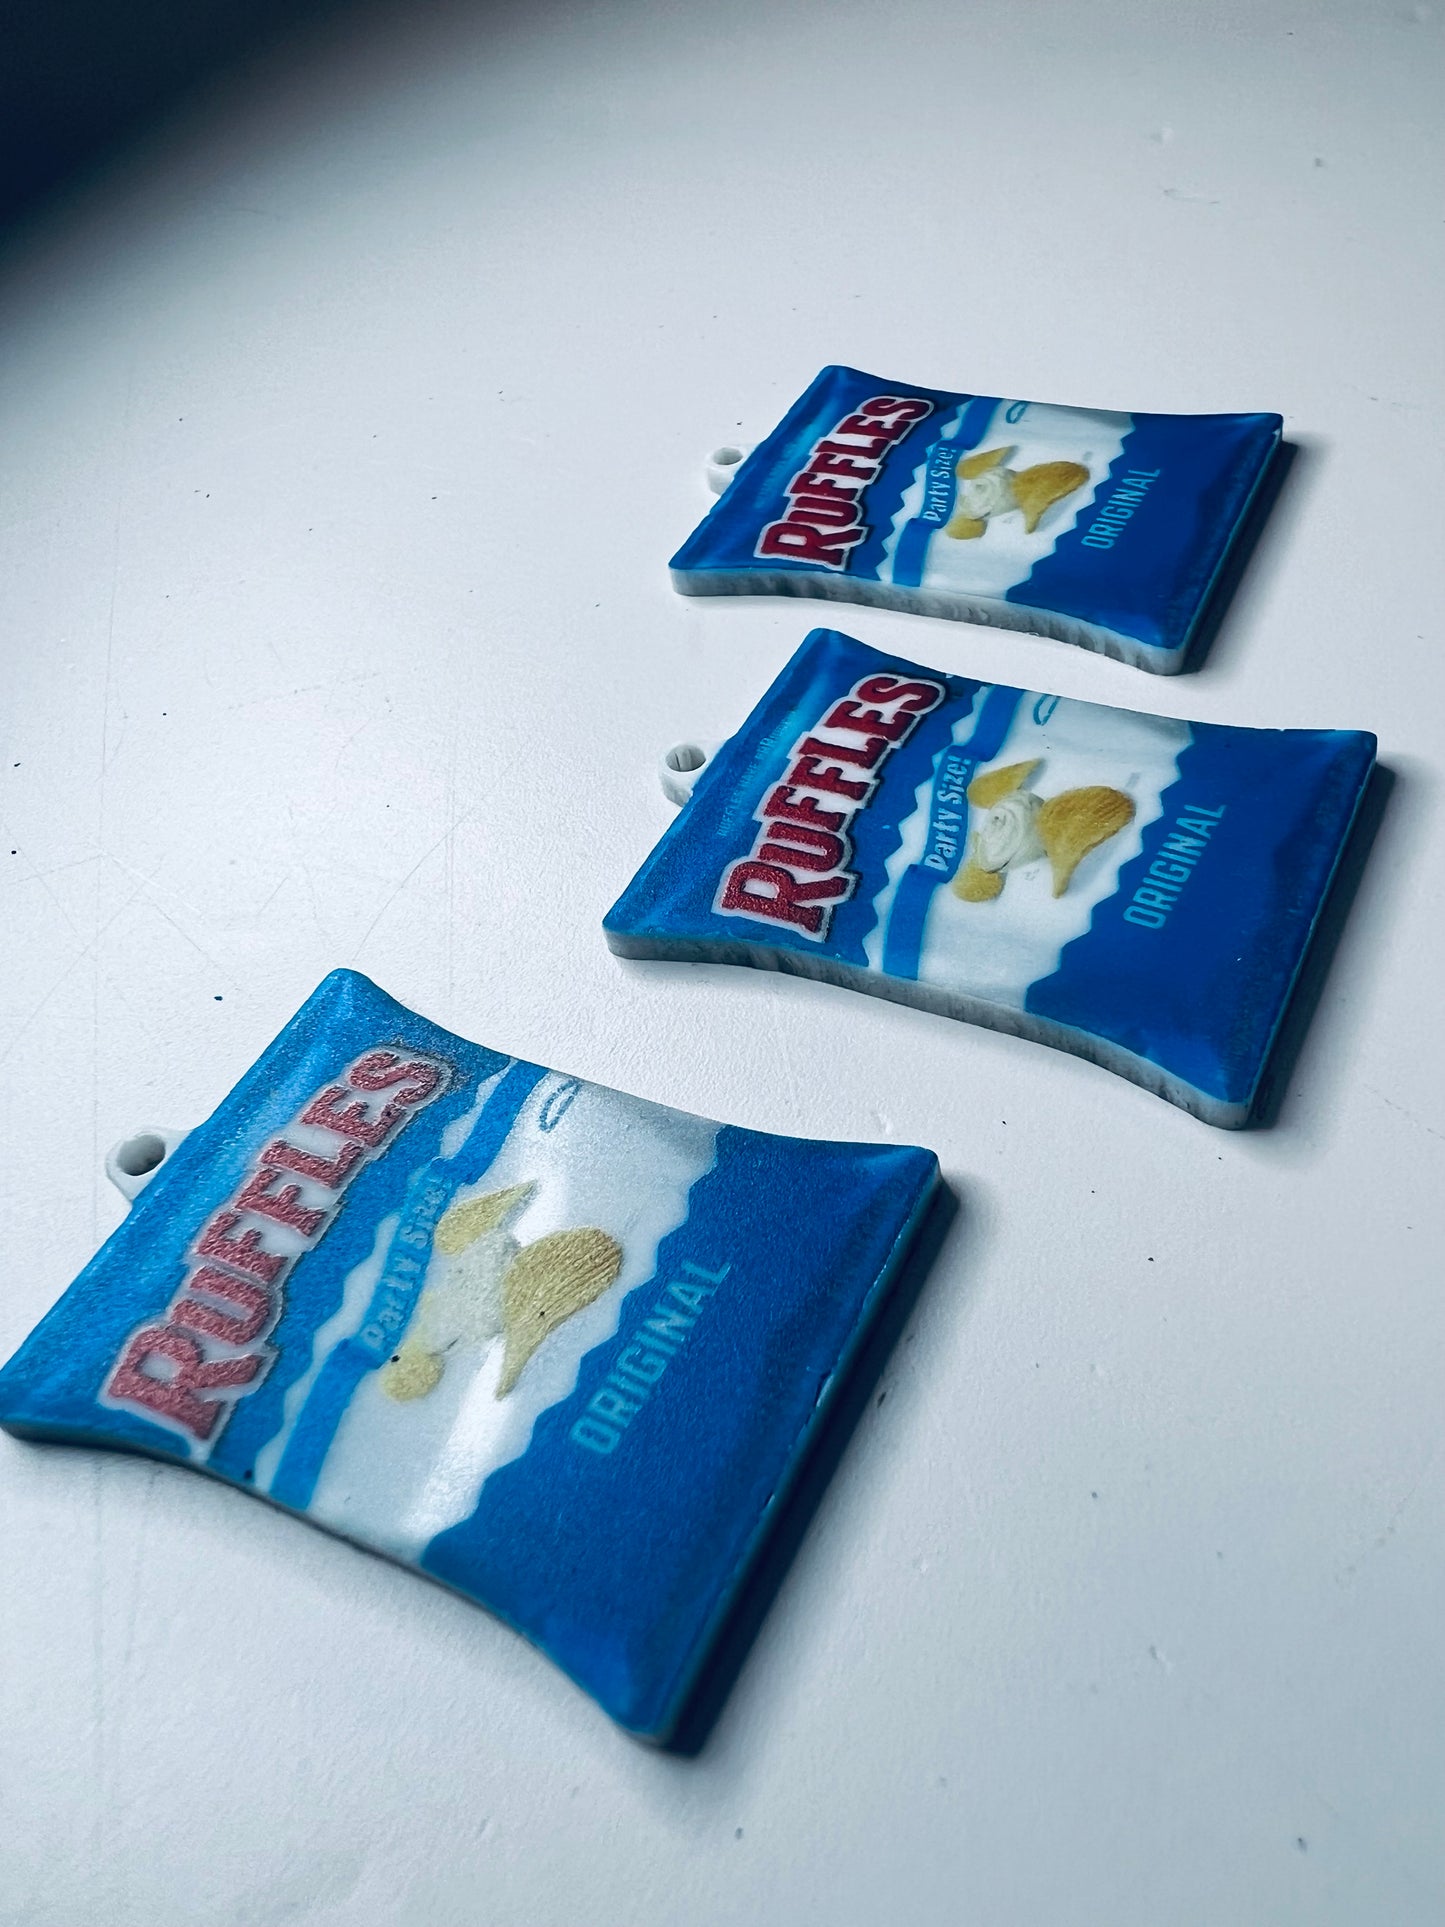 Mini Bag of Ruffles Chips Charm  Trinket Food Theme Trinkets Mini Objects for Speech Therapy Blend R Sounds Miniature Ruffles Bag